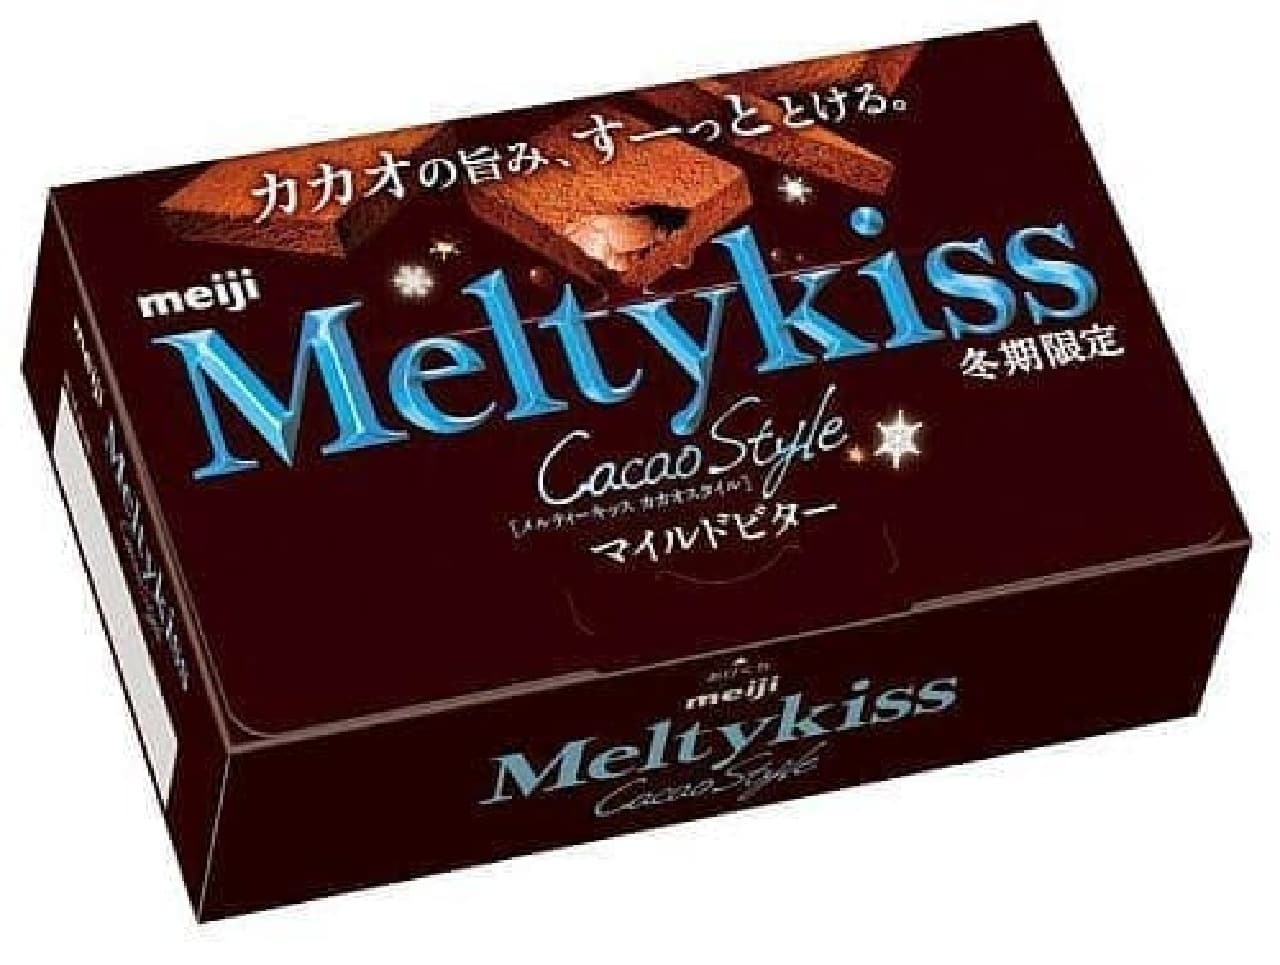 Meiji "Melty Kisska Cacao Style Mild Bitter"